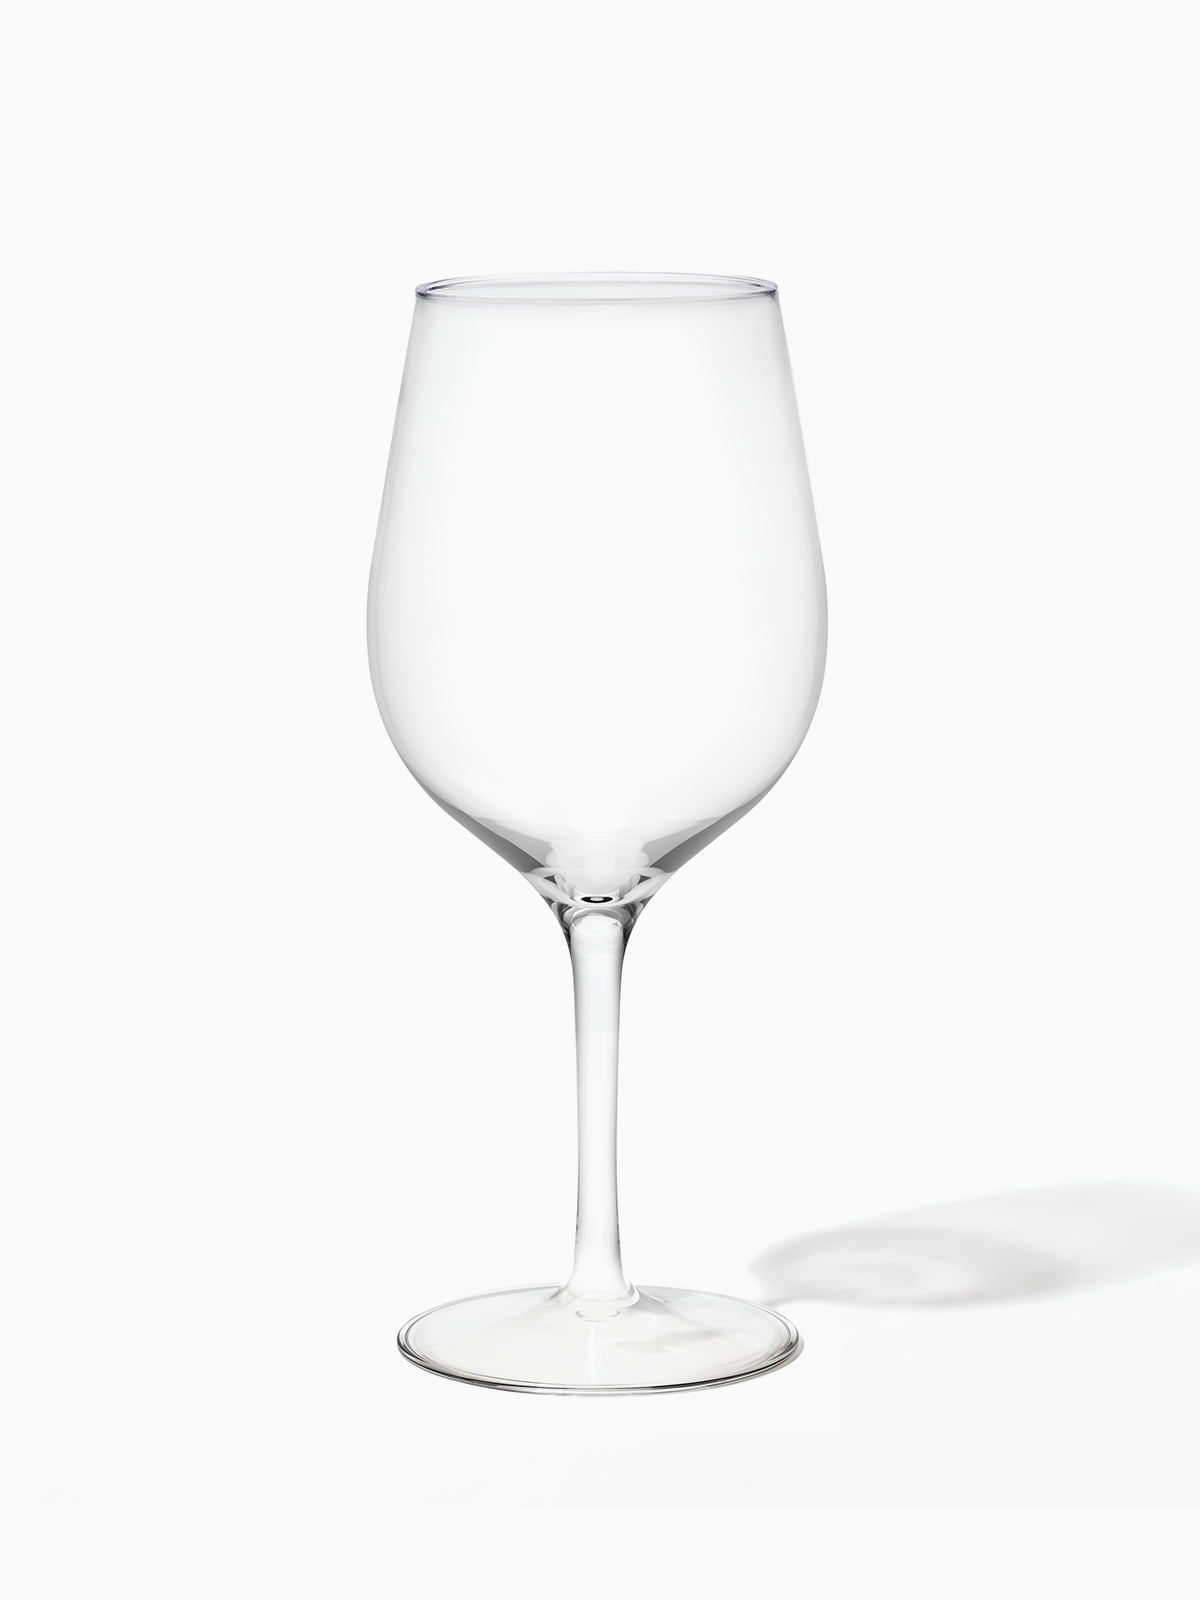 TOSSWARE Reserve Unbreakable 16 oz. Tritan Stemless Wine Glasses (Set of 4)